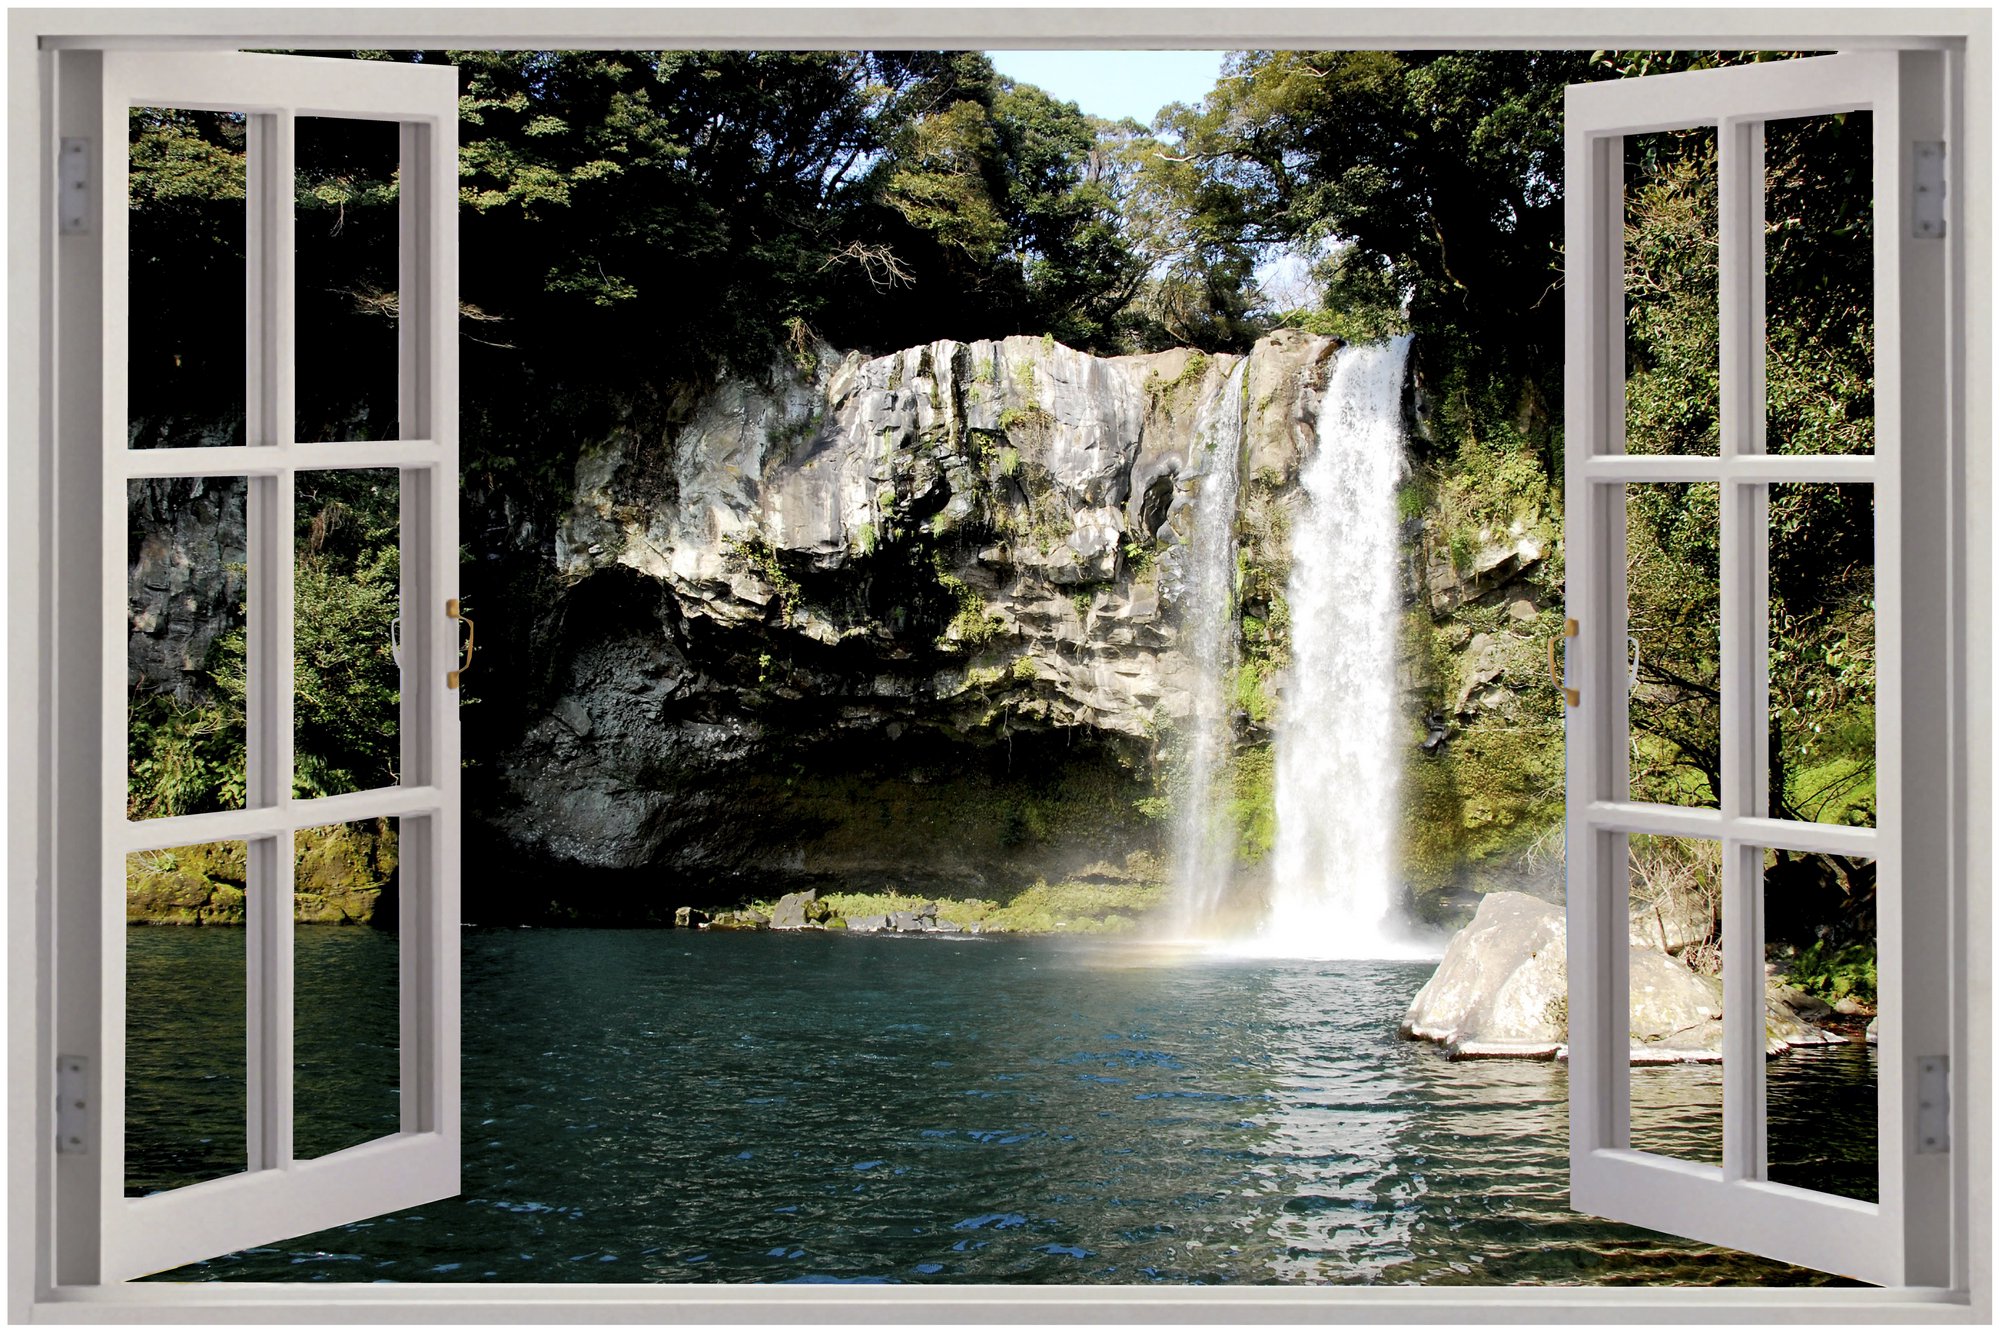  3D Window waterfall View Wall Stickers Film Mural Art Decal Wallpaper